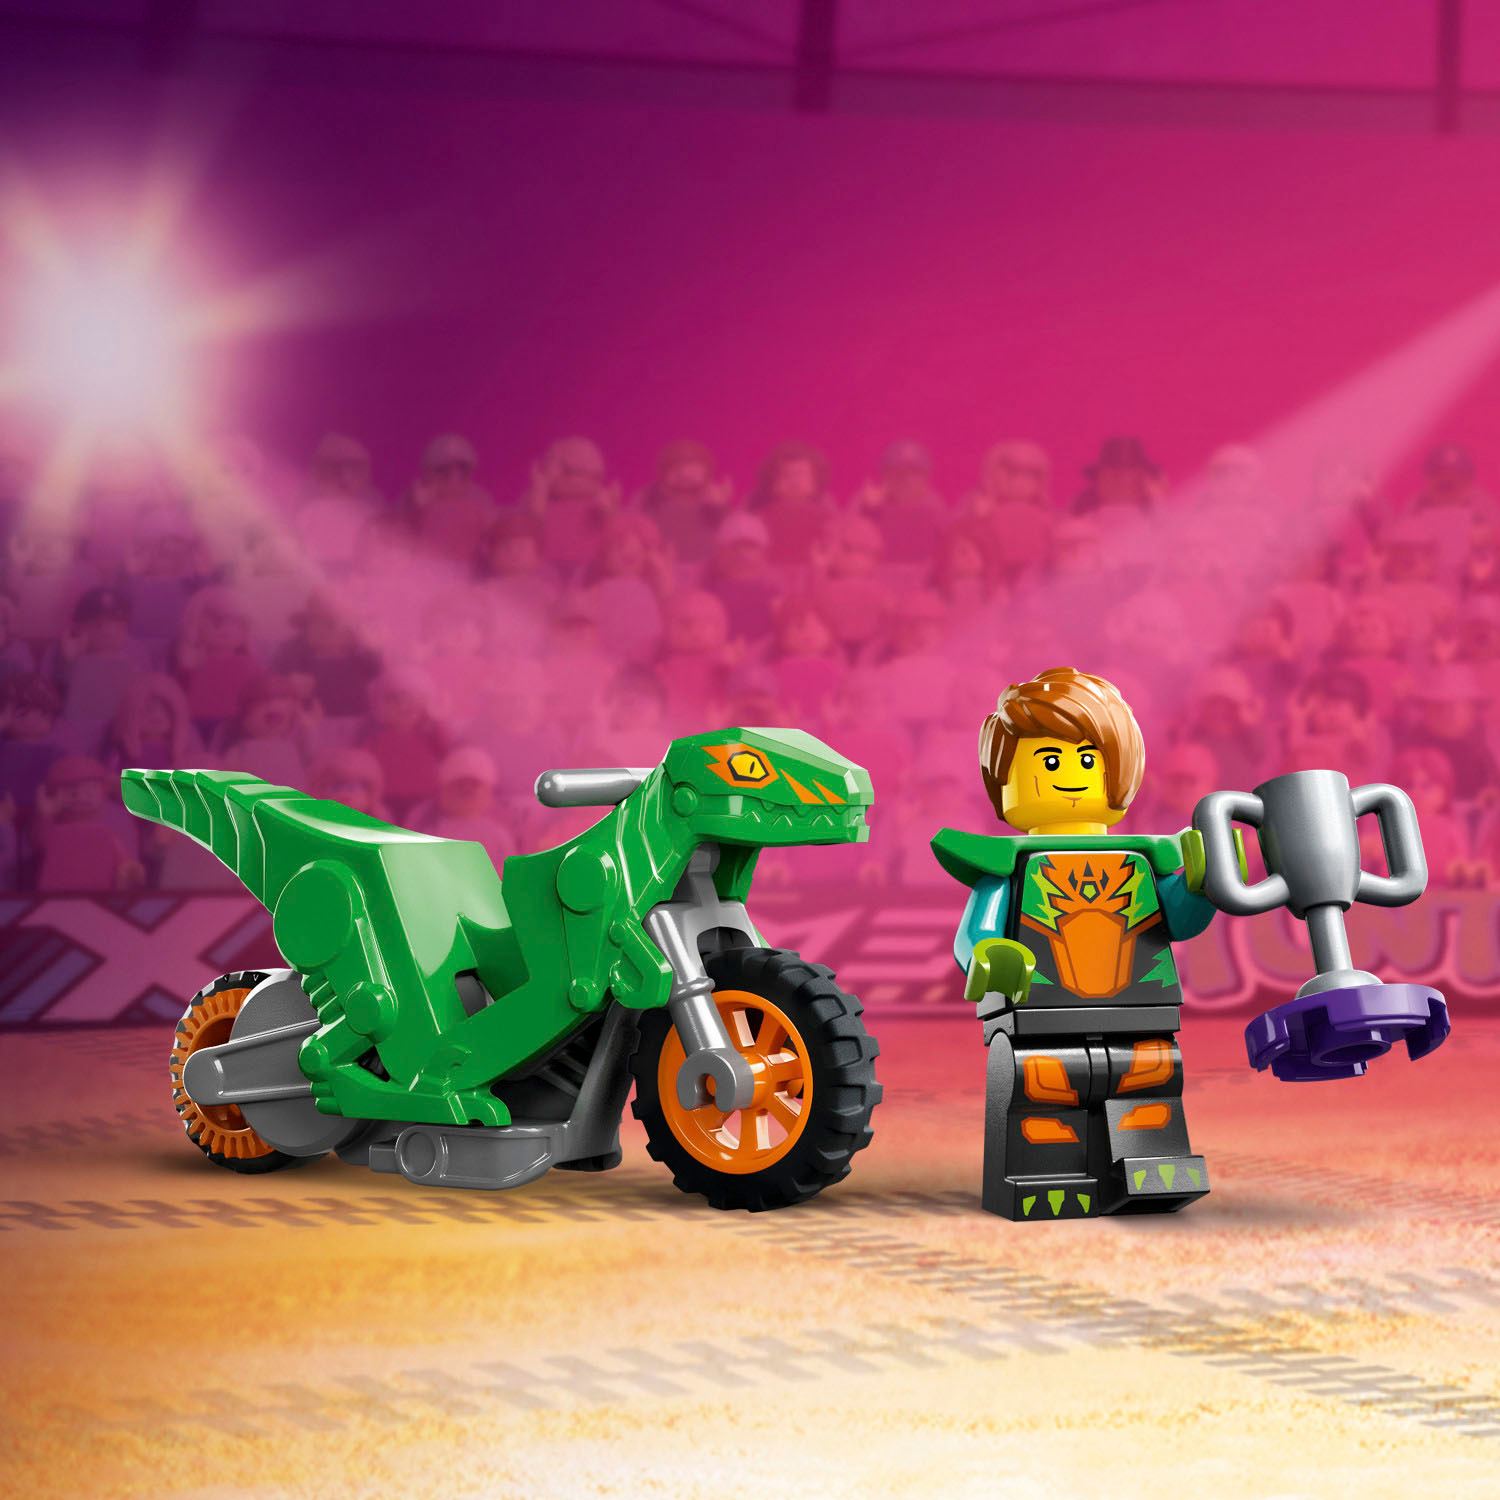 LEGO City Stunt Truck & Ring of Fire Challenge 60357 6425789 - Best Buy